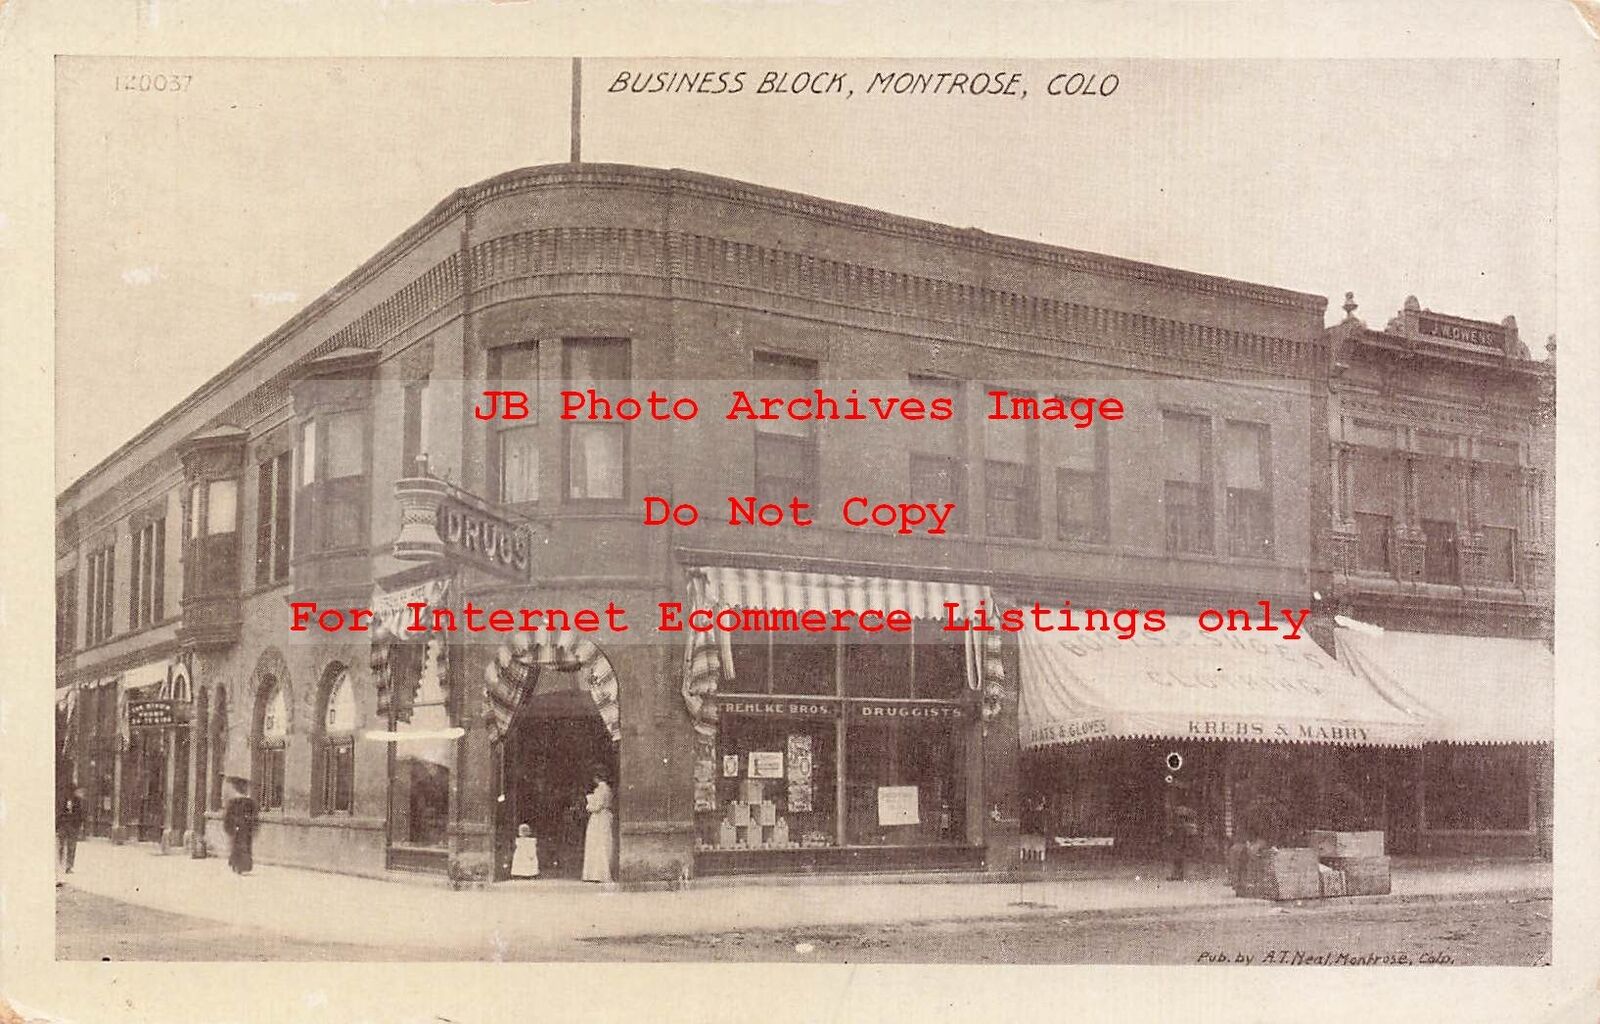 CO, Montrose, Colorado, Business Block, Drug Store, Exterior View